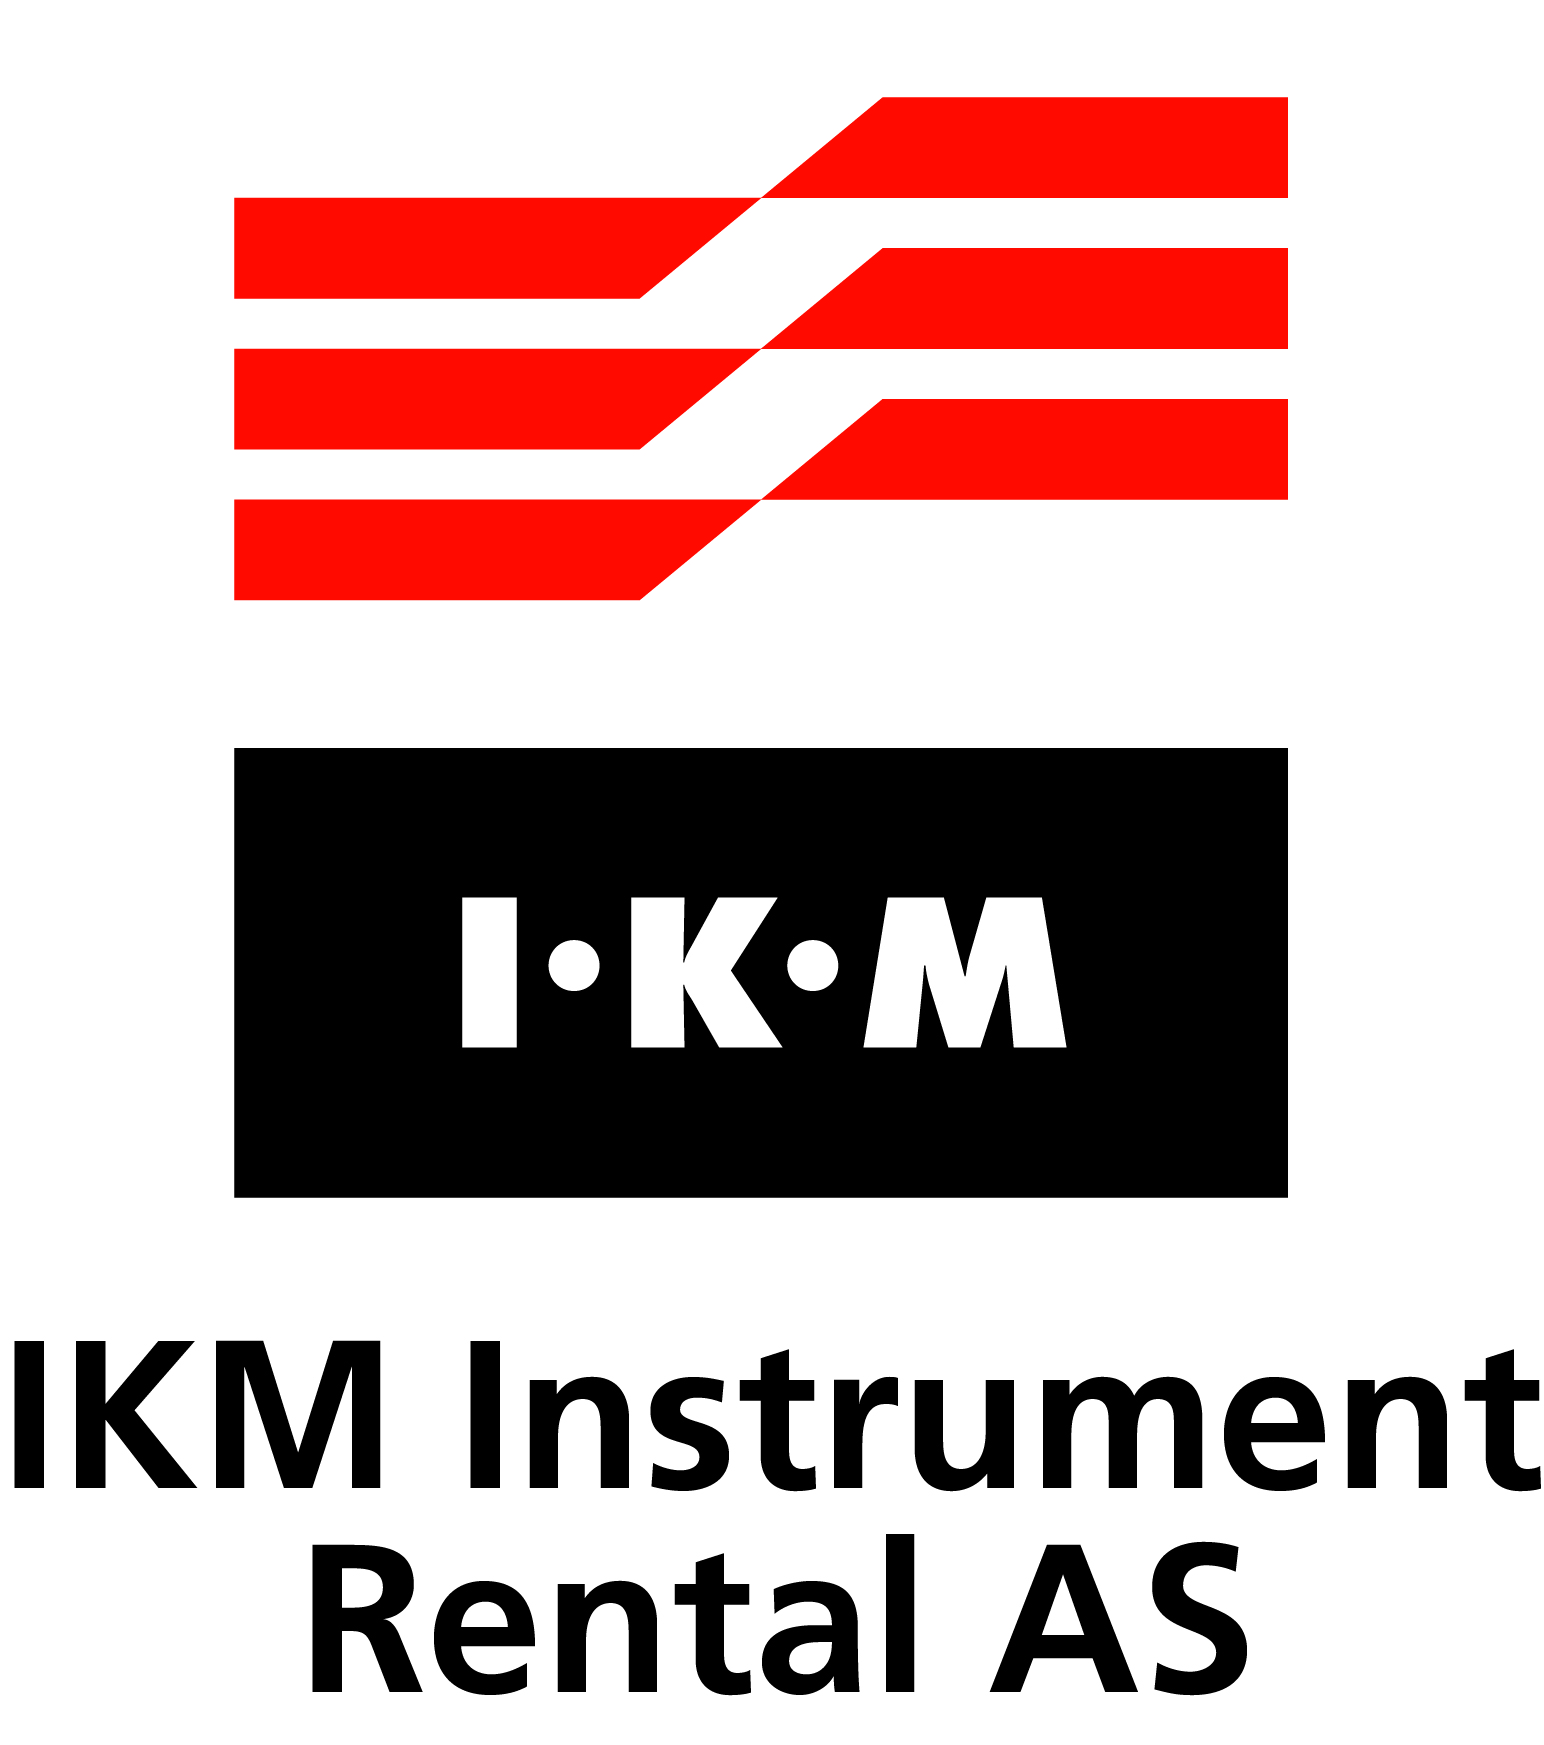 IKM Instrument Rental AS